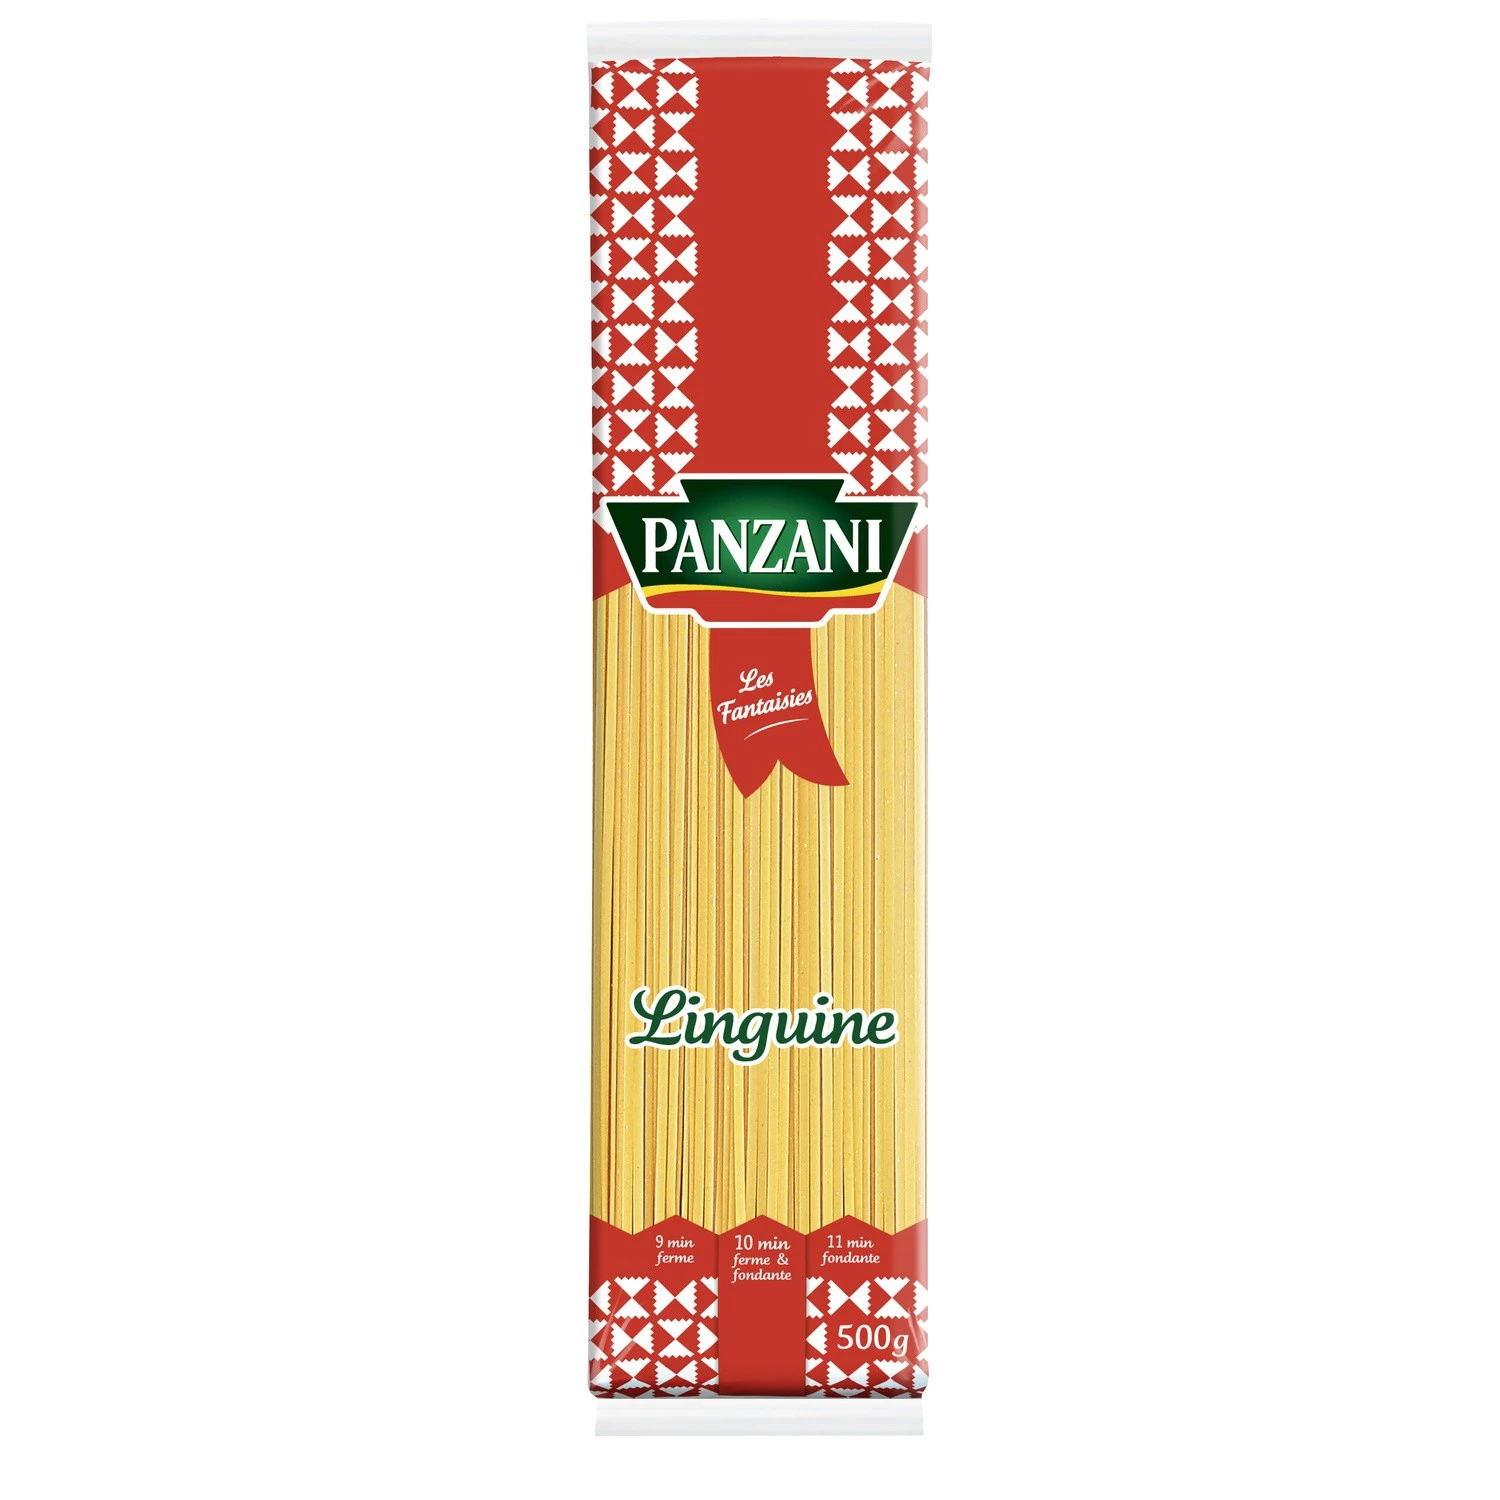 Mỳ Ý Spaghetti Linguine, 500g - PANZANI